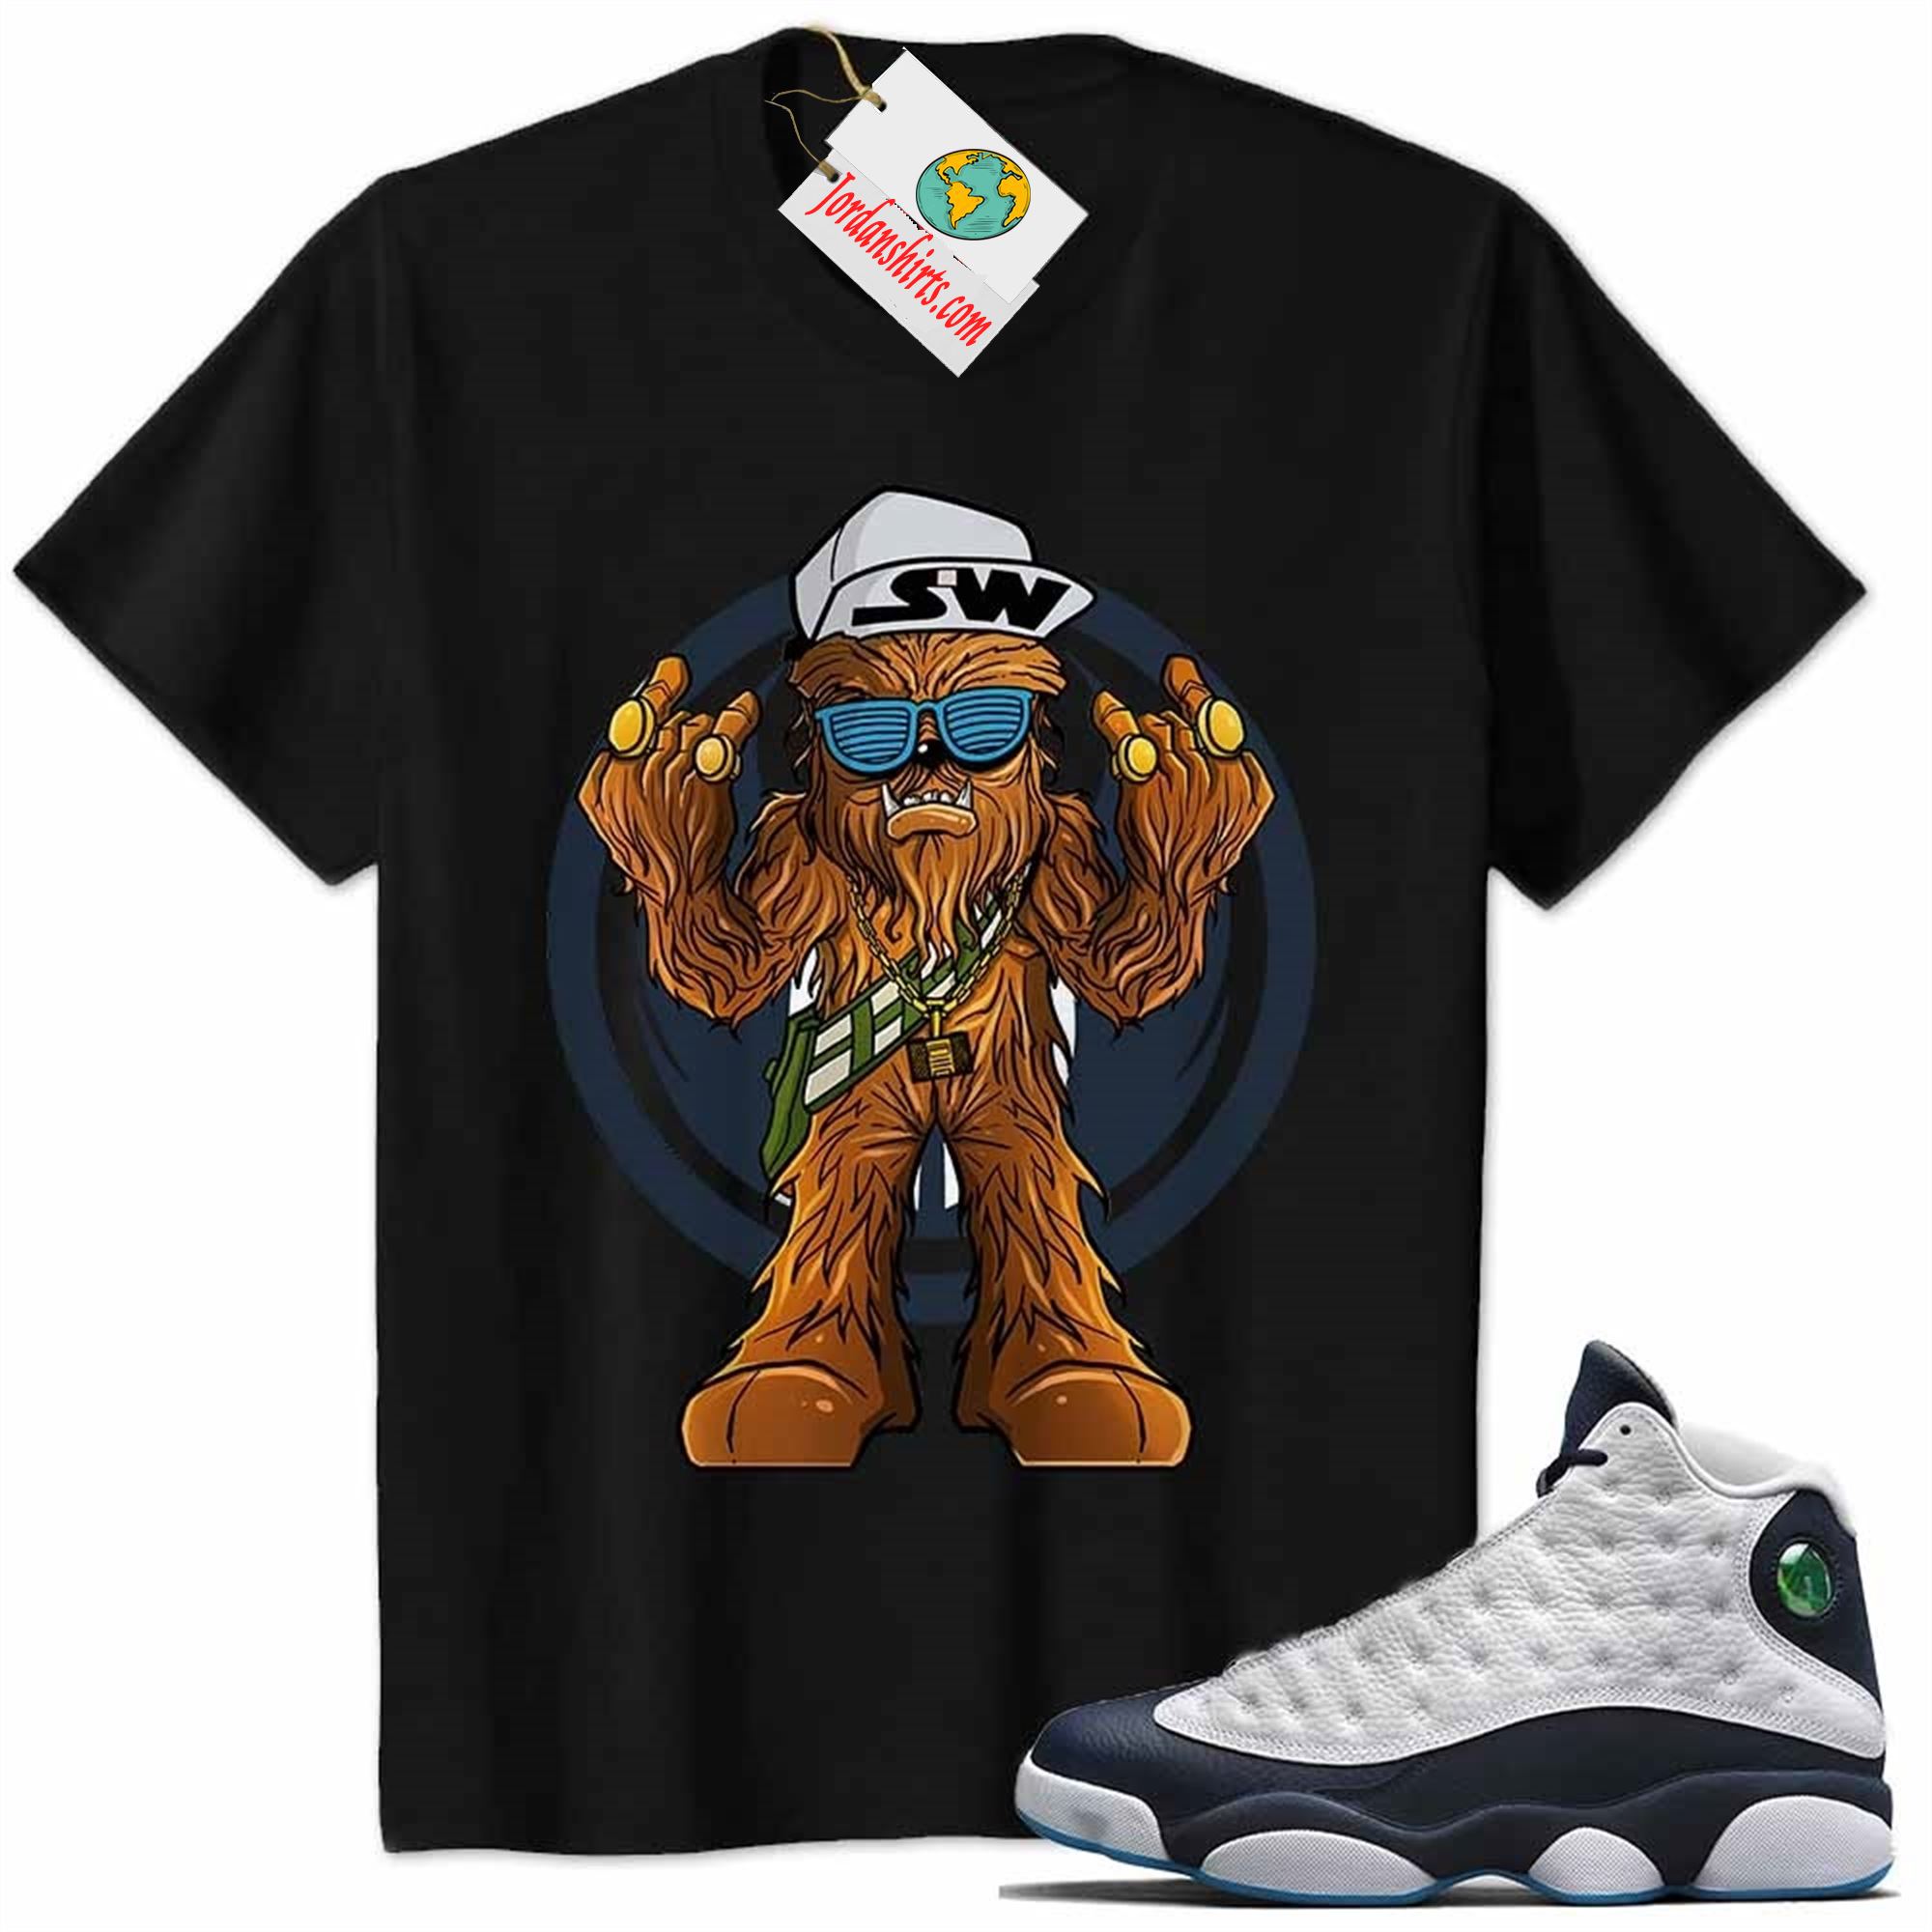 Jordan 13 Shirt, Gangster Chewbacca Stars War Black Air Jordan 13 Obsidian 13s Size Up To 5xl